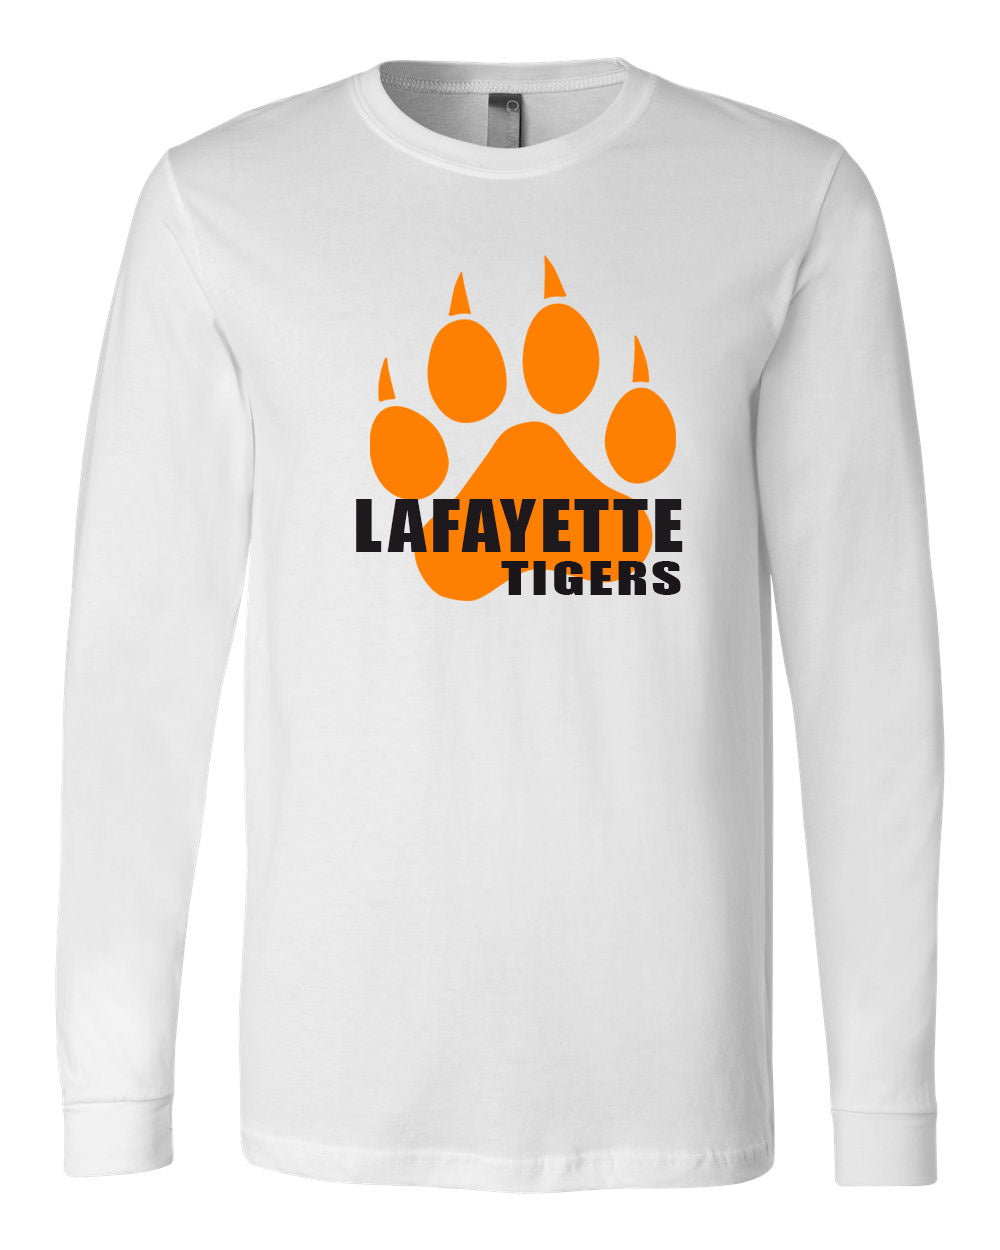 Tigers Design 7 Long Sleeve Shirt